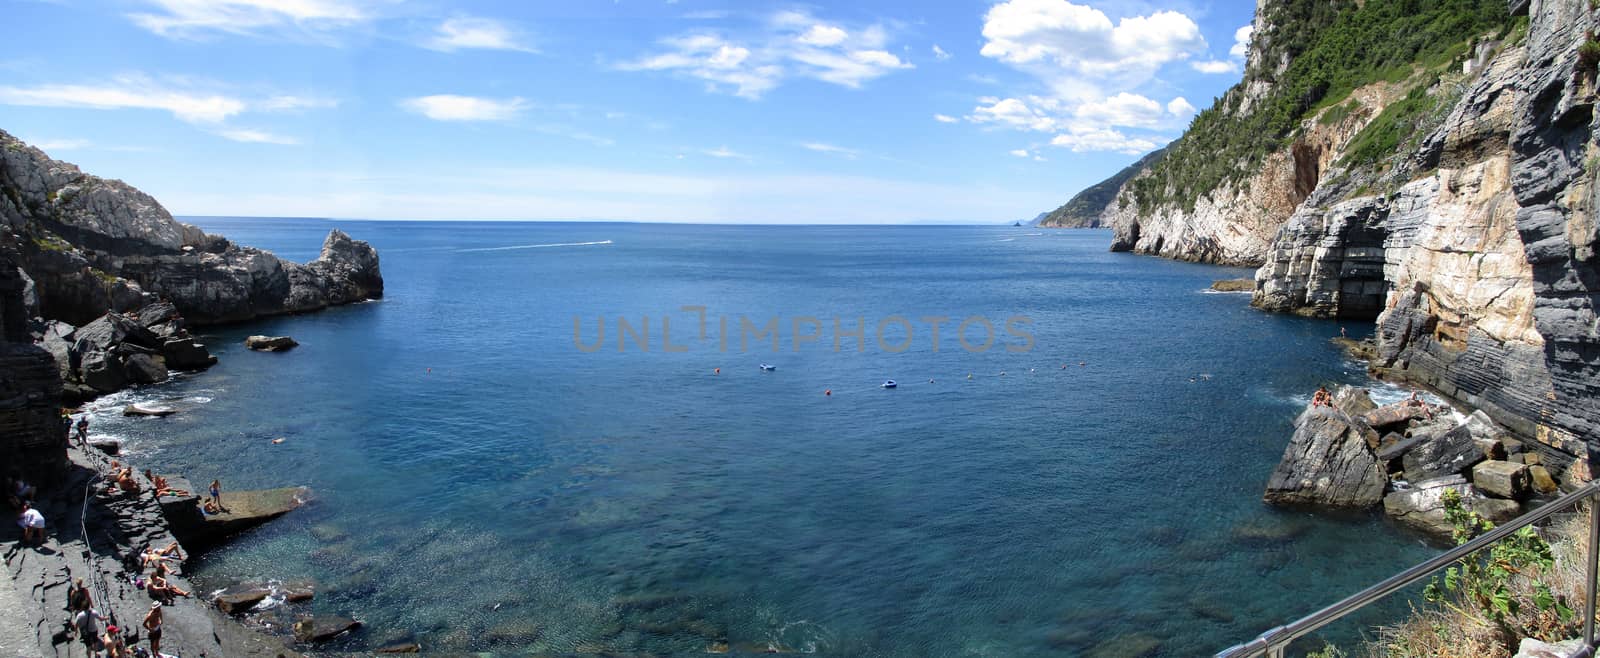 view of the coast and sea around Portovenere q by diecidodici